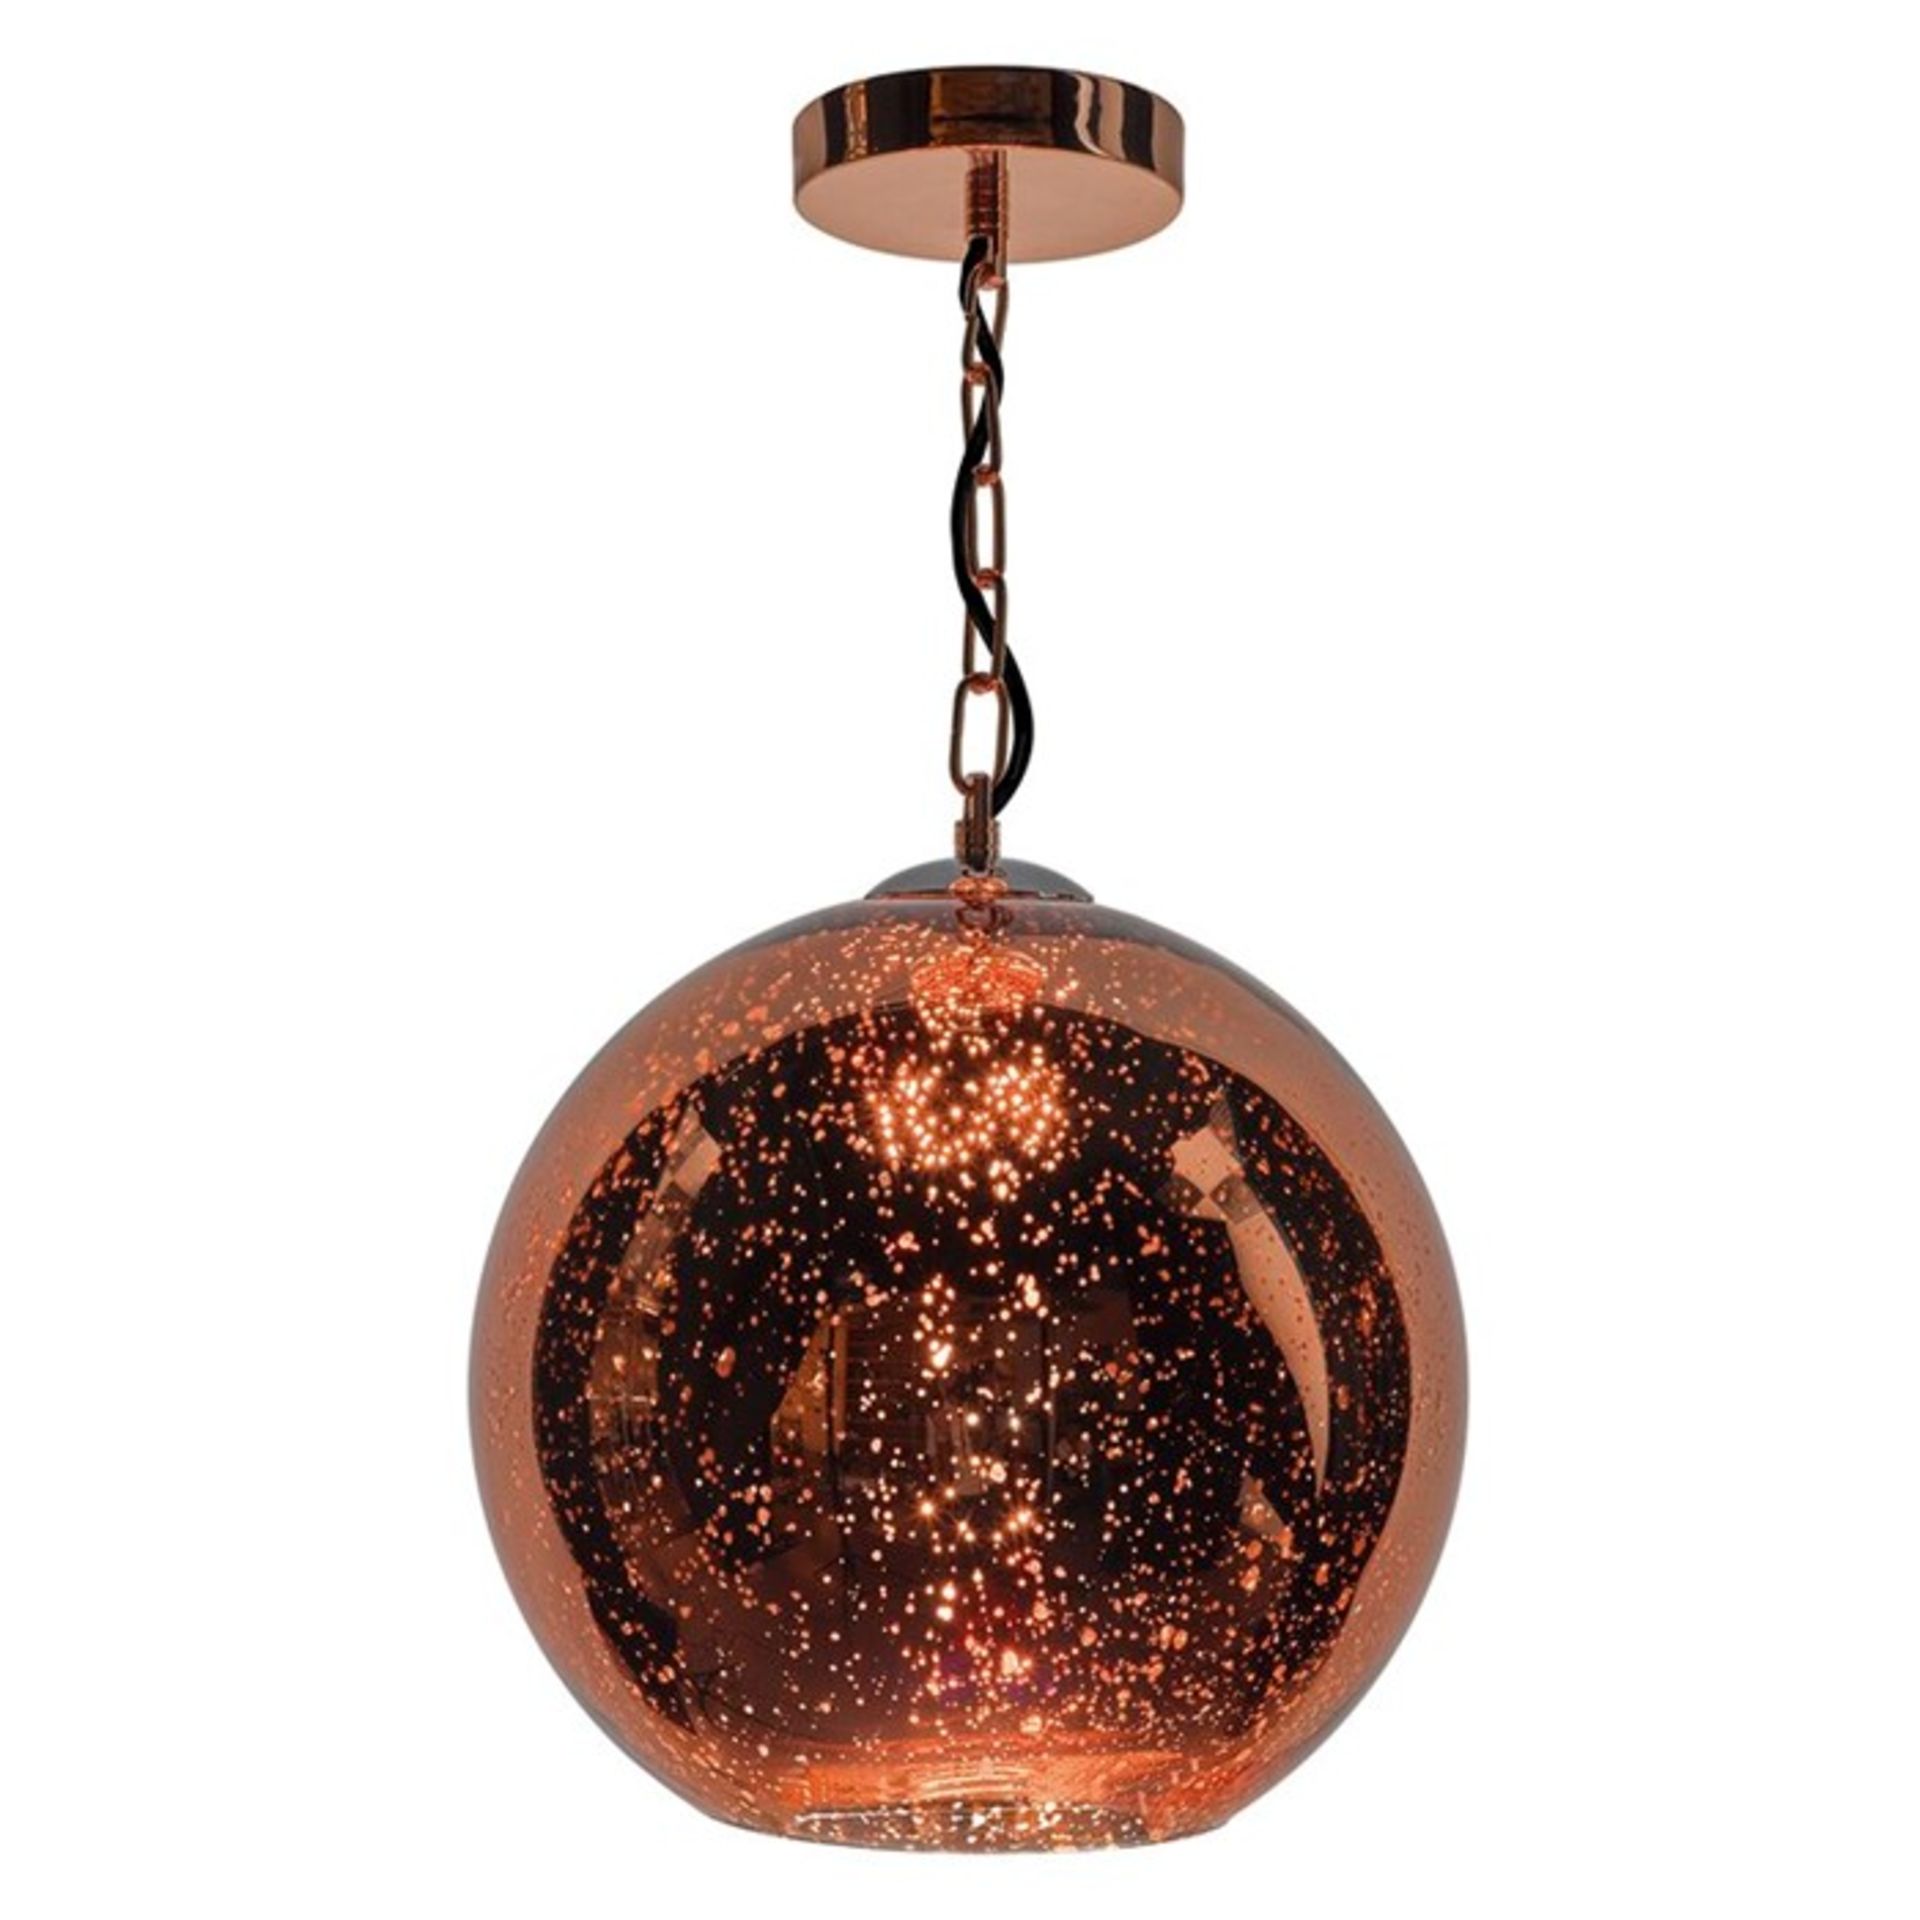 Dar Lighting, Speckle 1-Light Globe Pendant (COPPER) - RRP £81.19 (DLI7330 - 9588/28) 6A